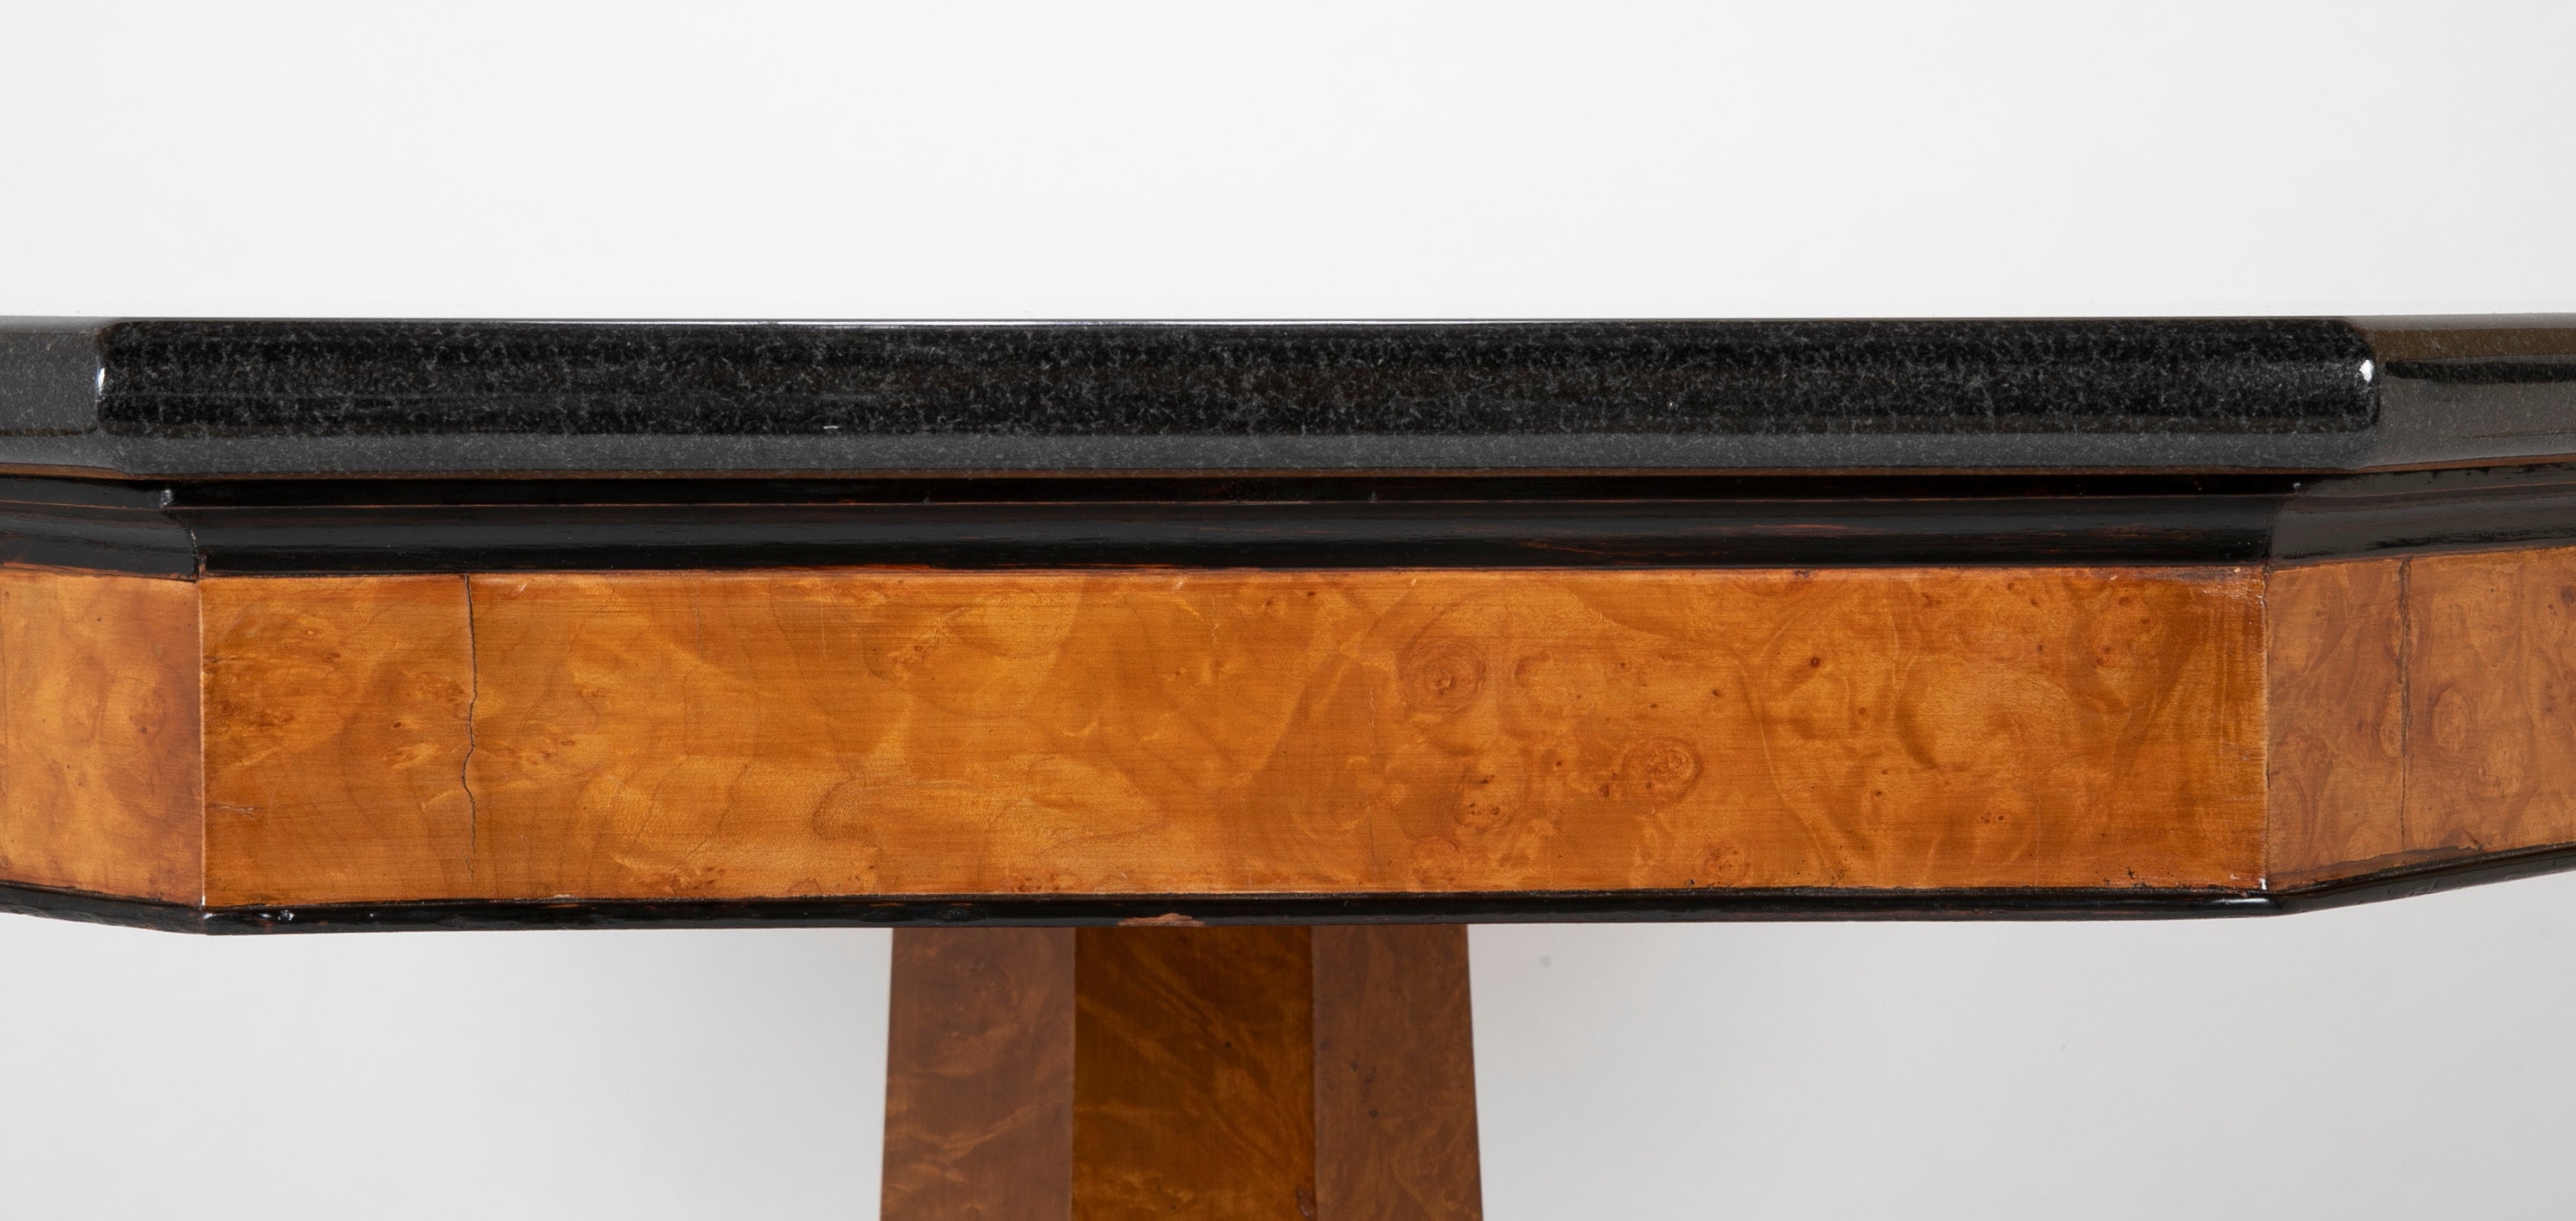 An Octagonal Biedermeier Style Marble Top Center Table